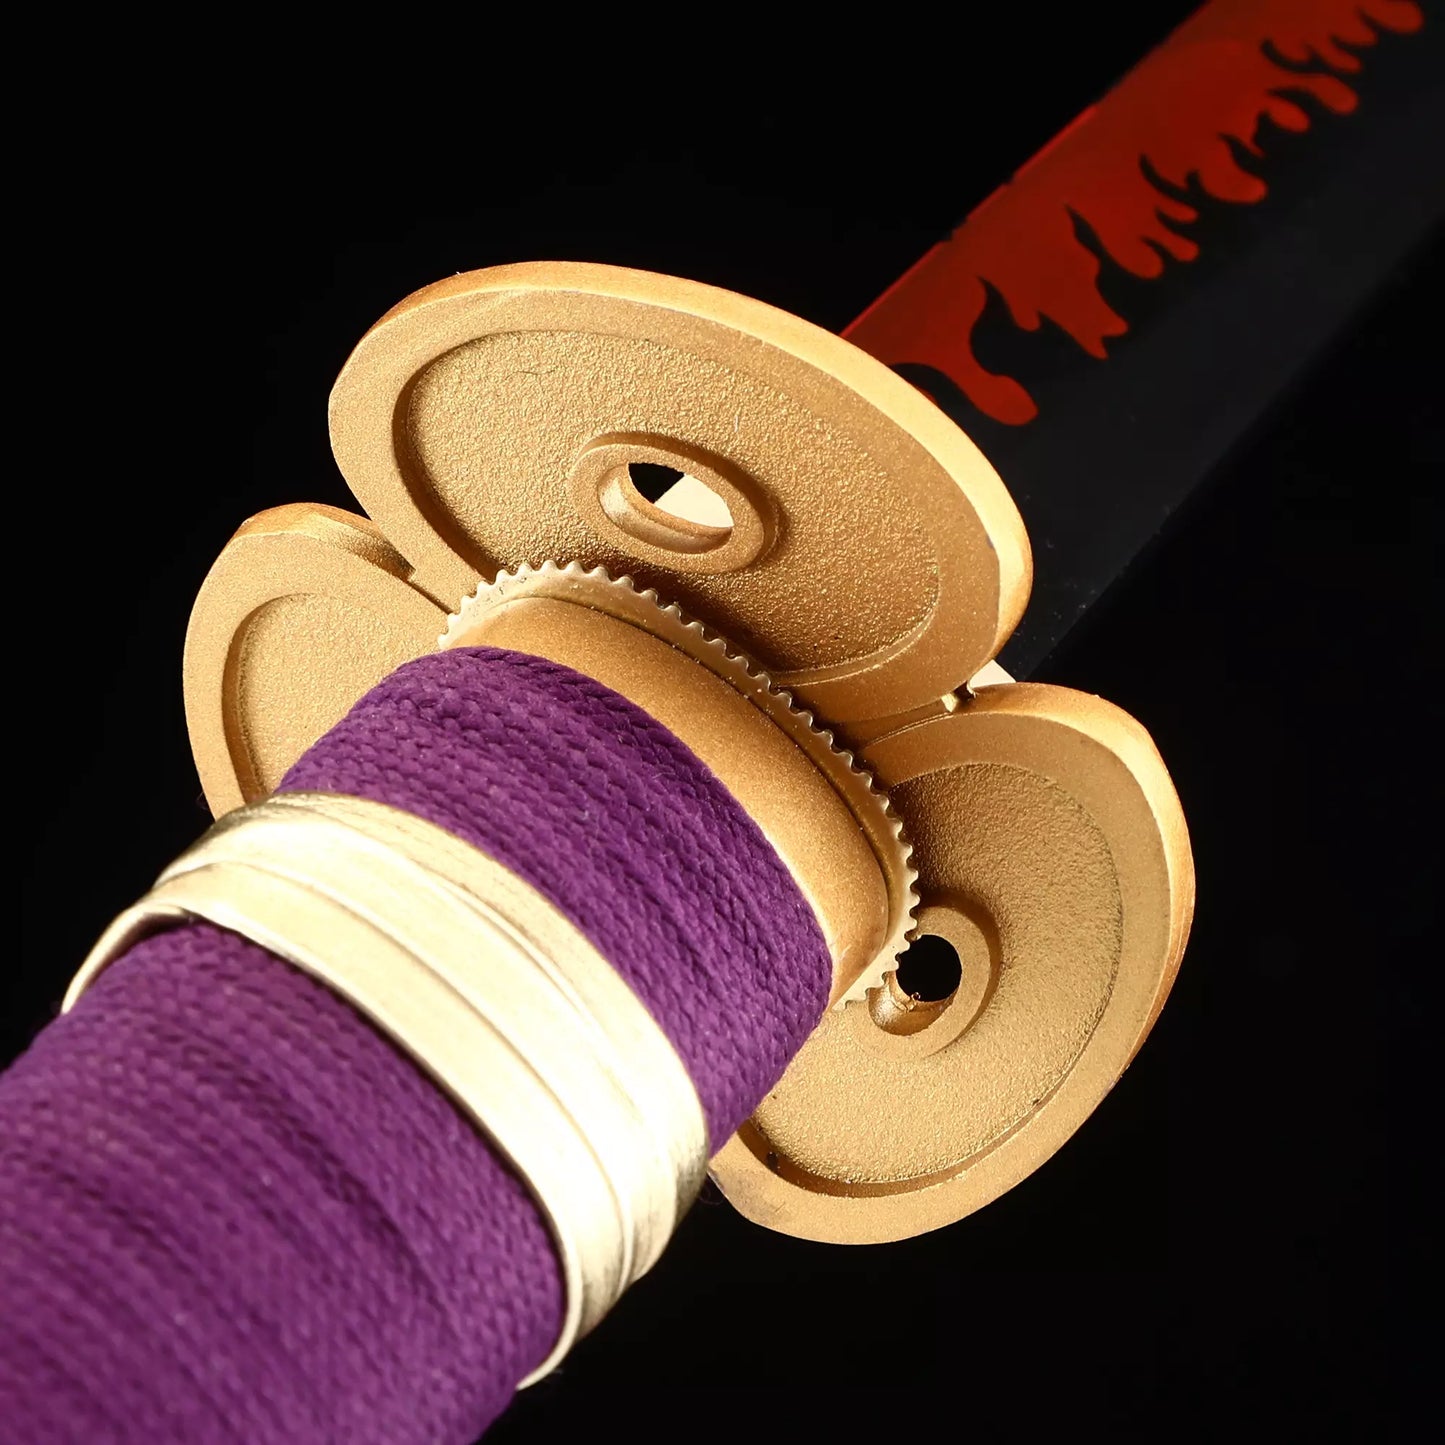 Yama Enma Sword, Roronoa Zoro Katana Sword, Carbon Steel